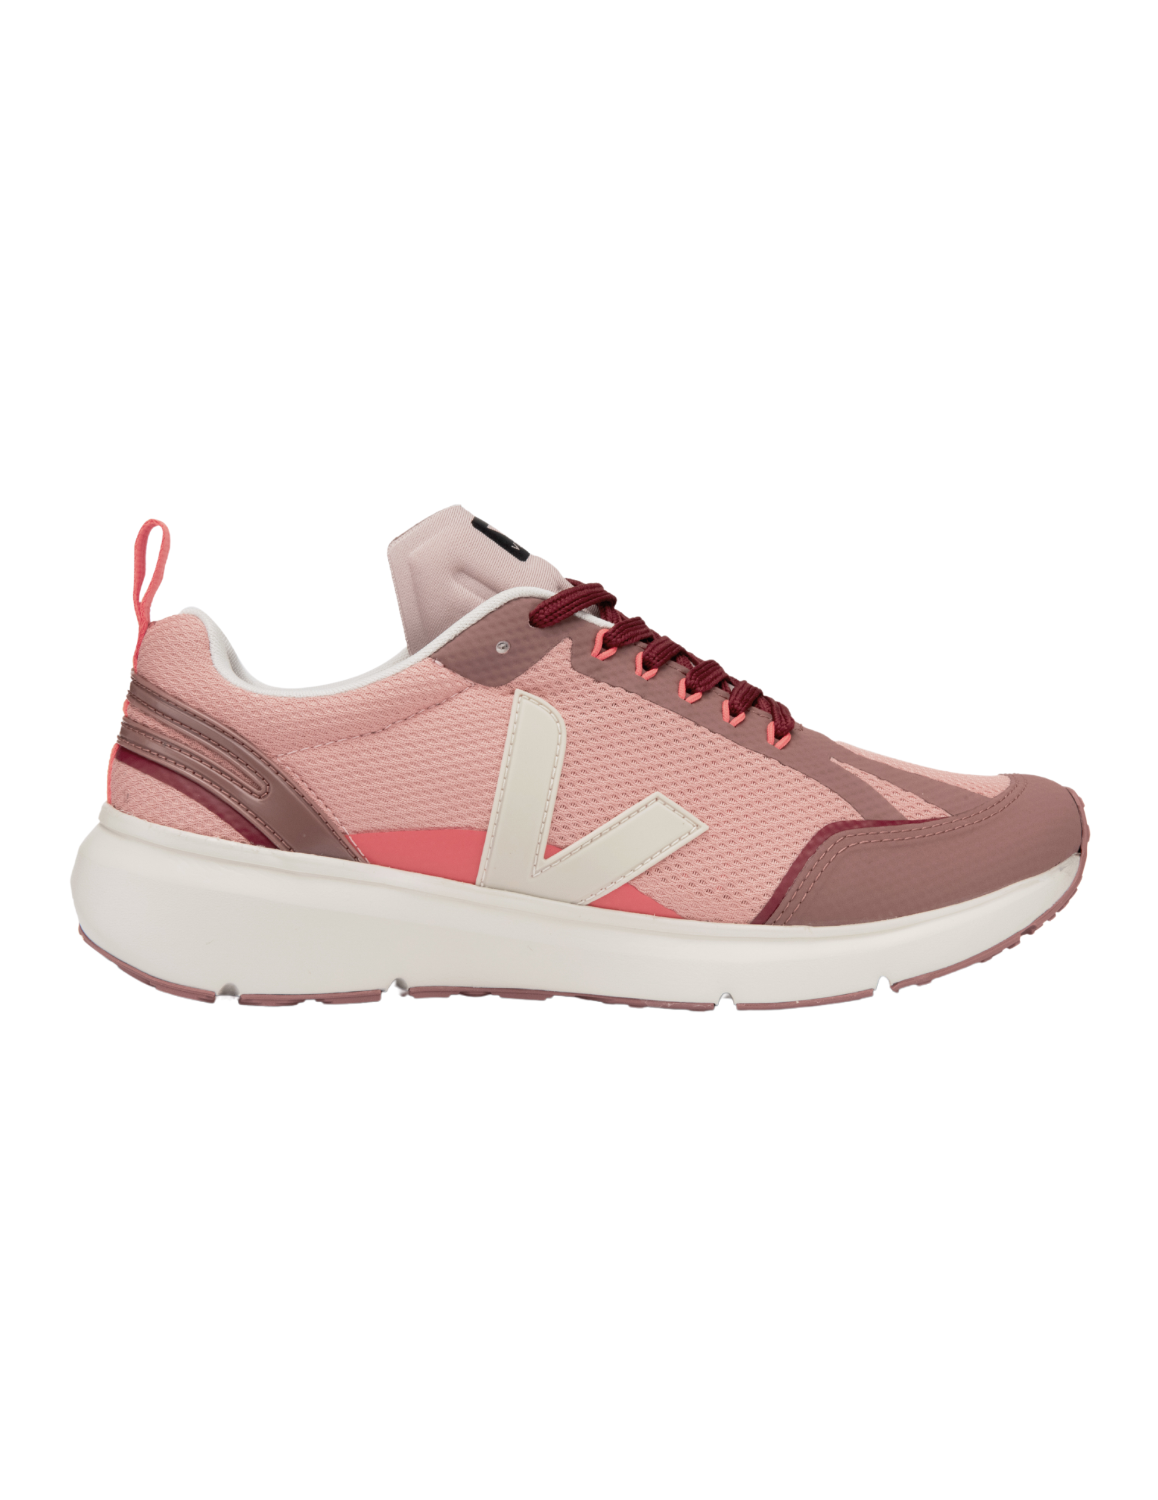 Chaussures de Running Veja Condor 2 Femme Rose